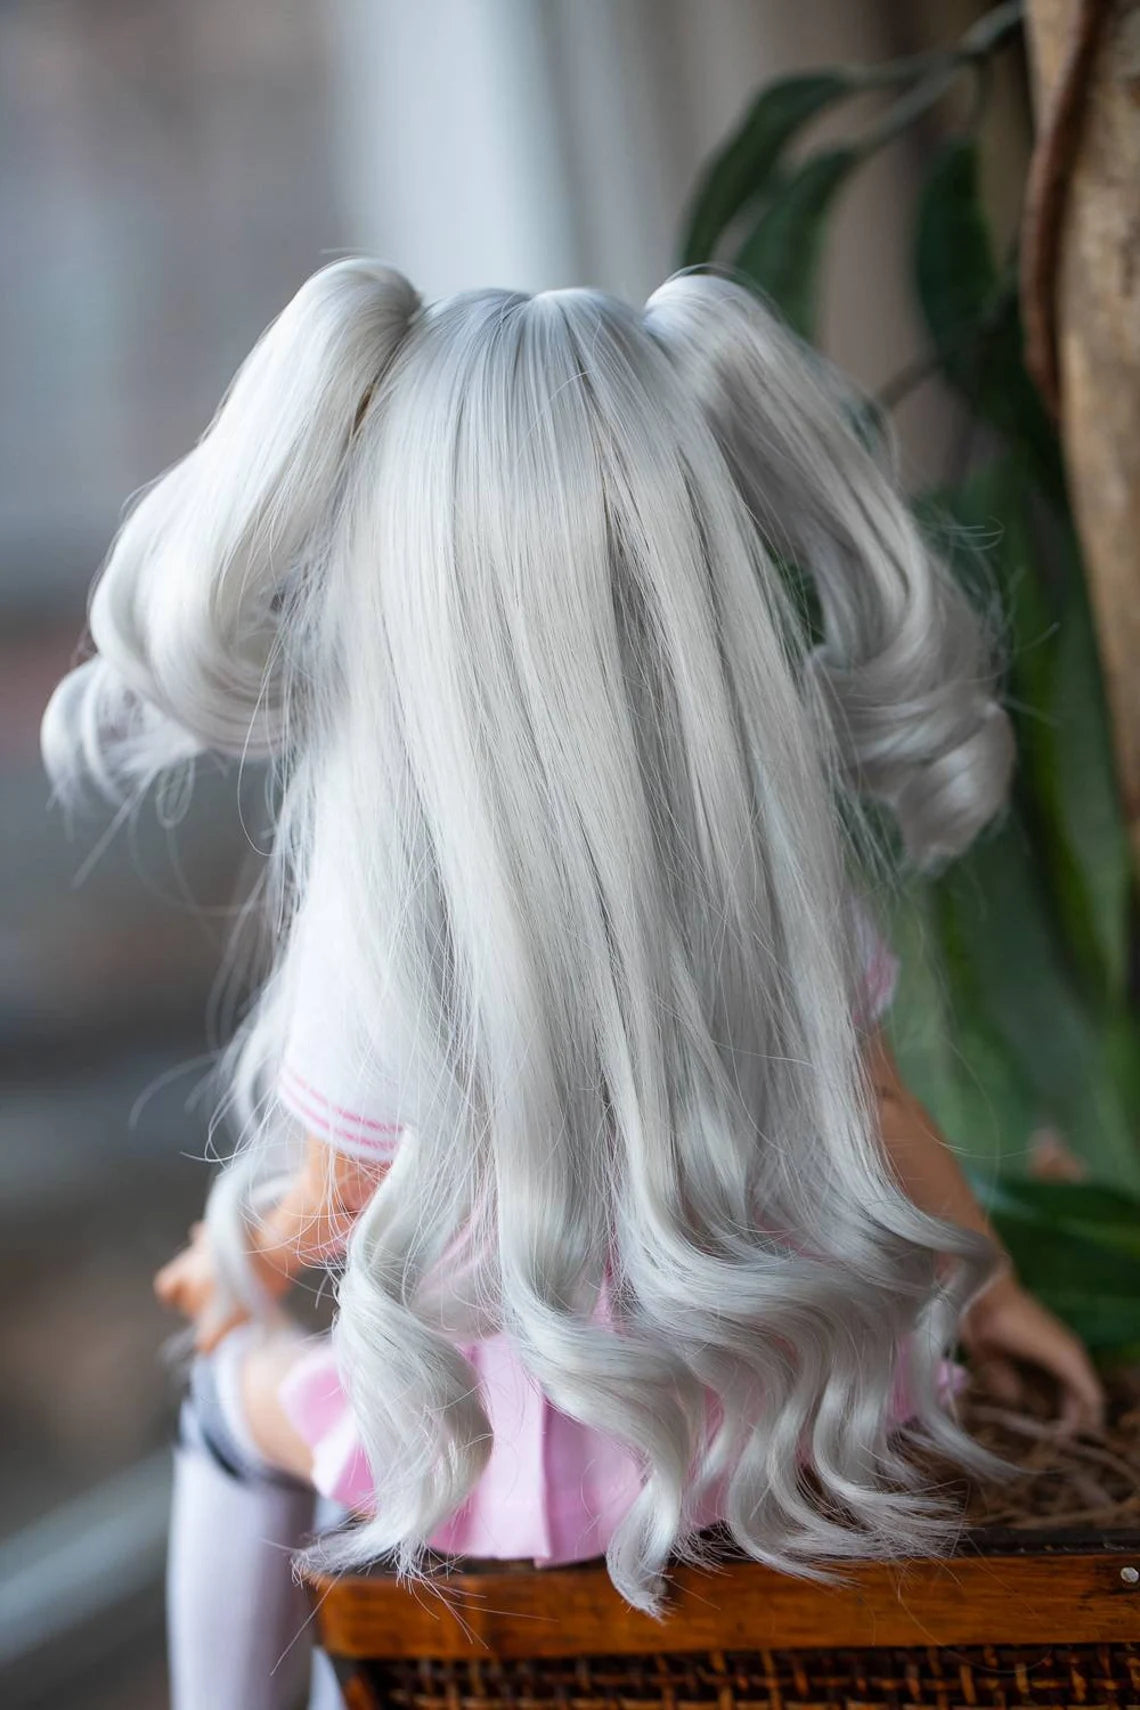 Custom doll Wig for Minifee Dolls- "TAN CAPS" 6-7" head size of Bjd, msd, Boneka ,Fairyland Minifee dolls anime limited